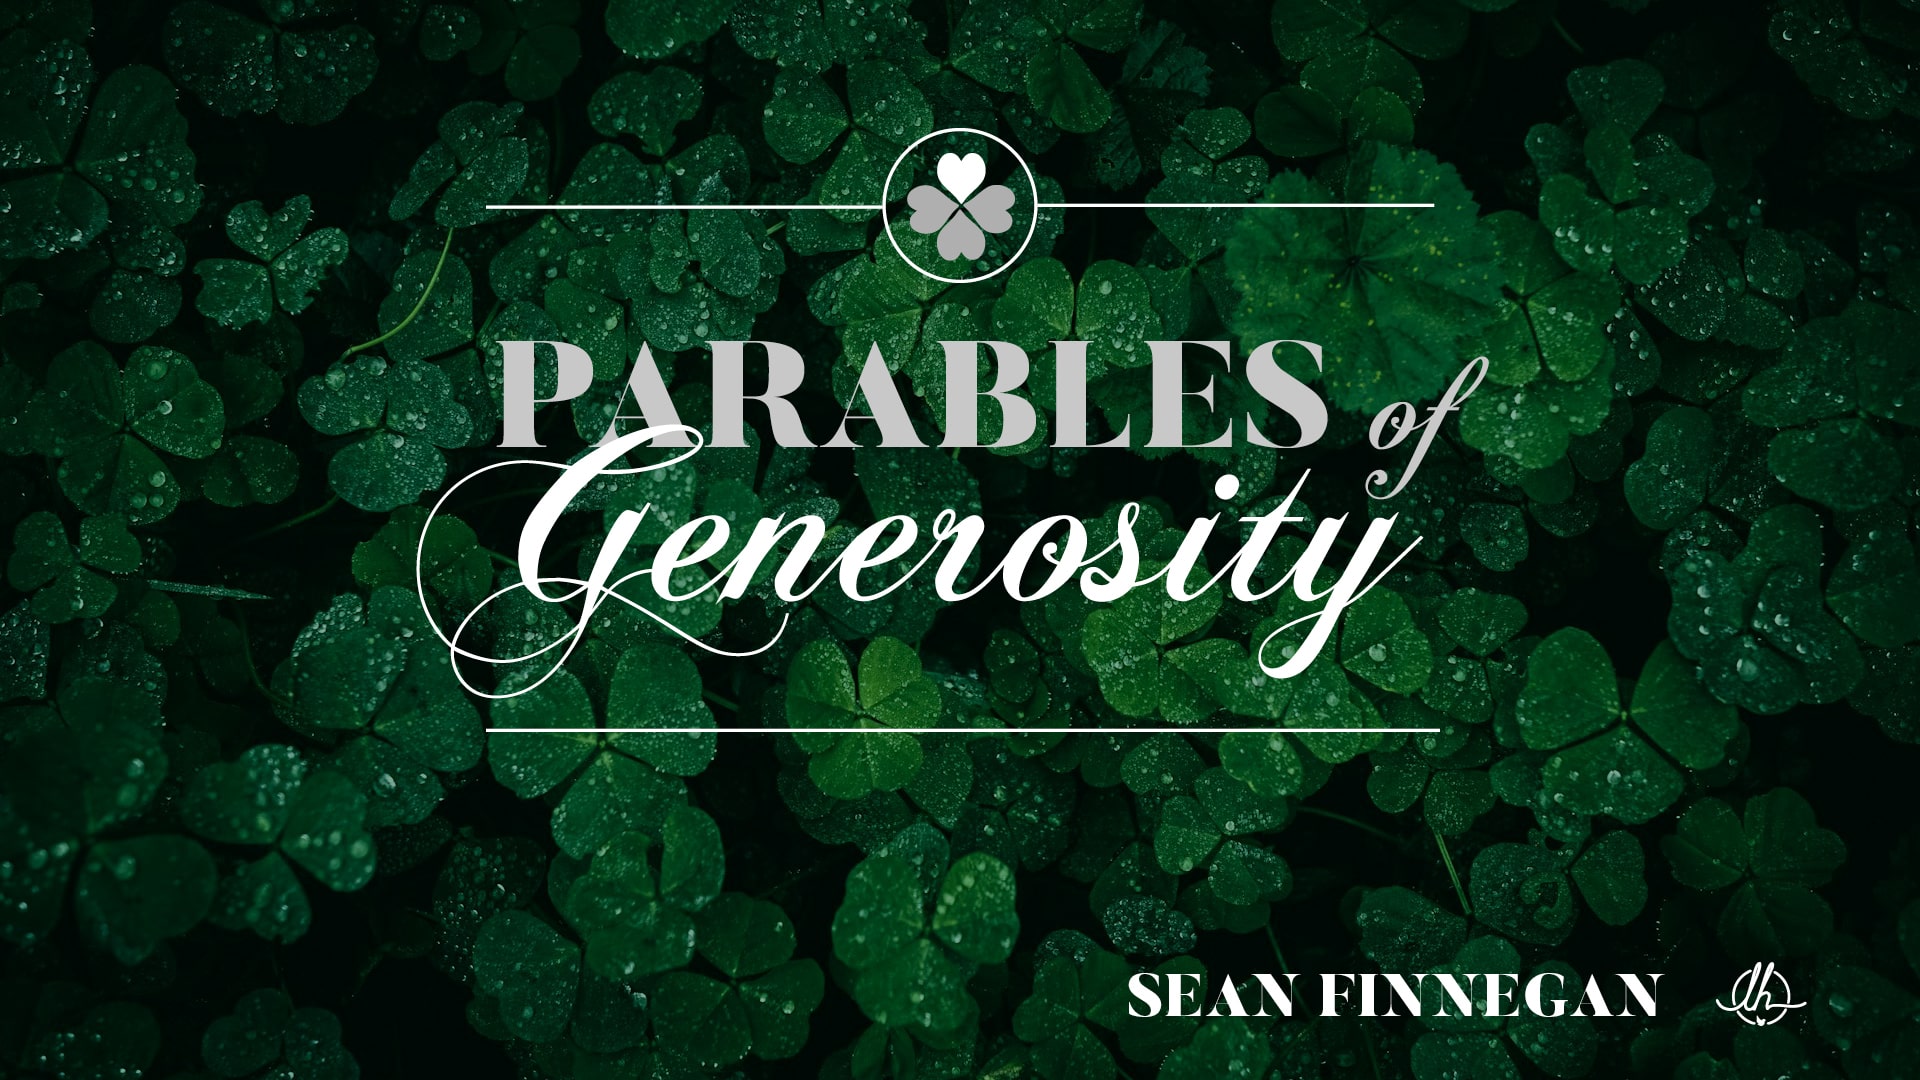 Parables of Generosity